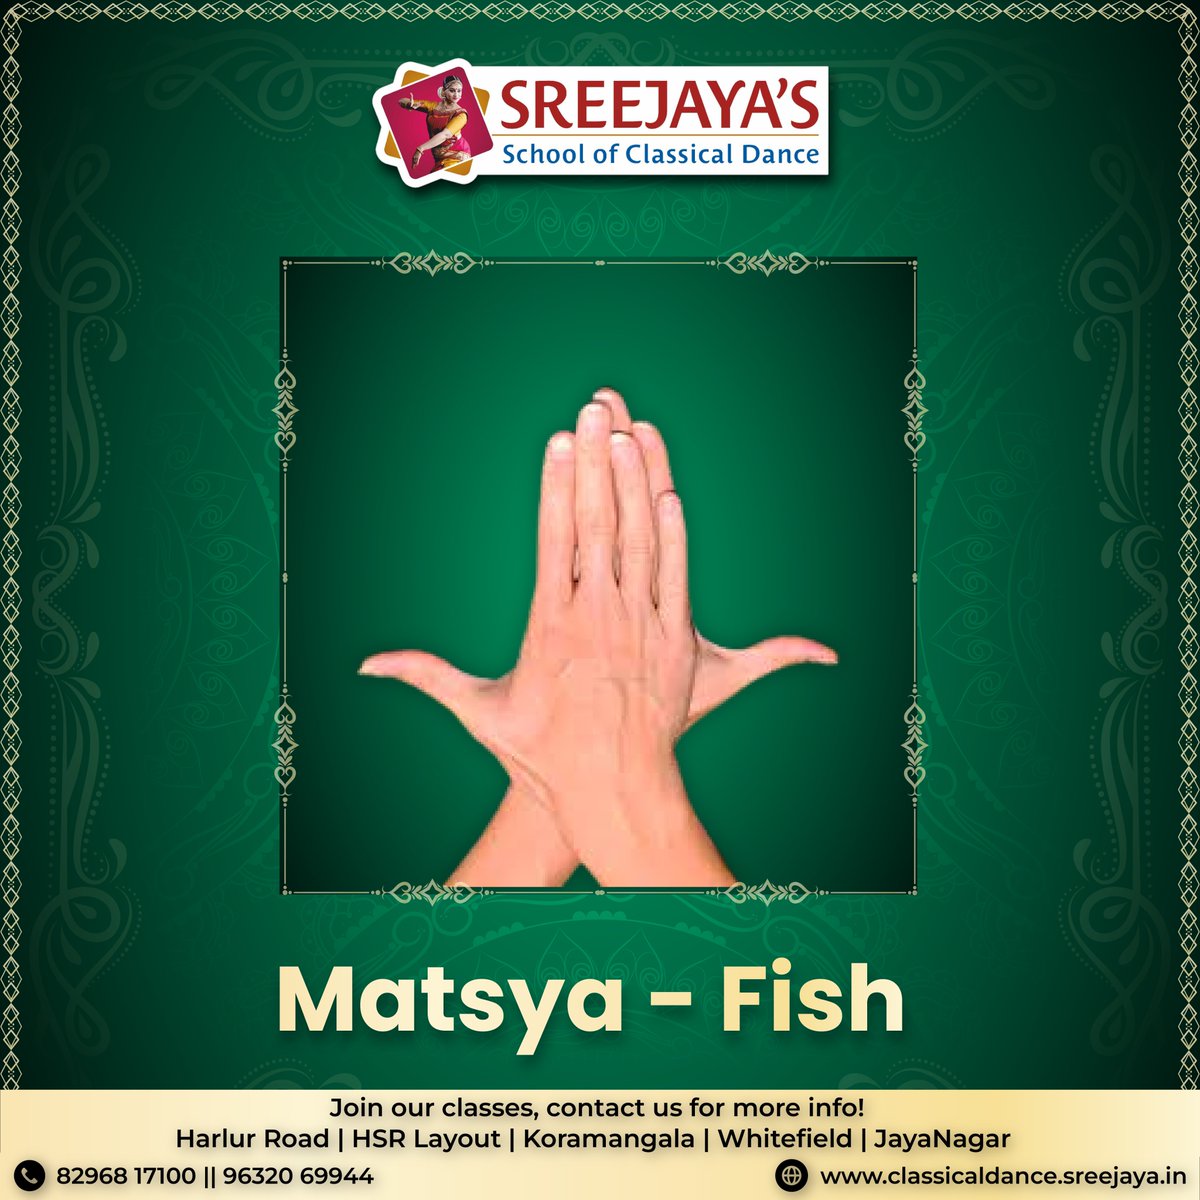 Matsya means Fish!

Learn Professional #Bharatanatyam from #SSCD

#classicaldanceclasses #Bangalore #bharatnatyamdance #Dance #bharathanatyamdancer #indianclassicaldance #bharatnatyamlove #bharatnatyampose #bharatnatyammudra #mudras #handgestures #bharatnatyamhandgestures #matsya